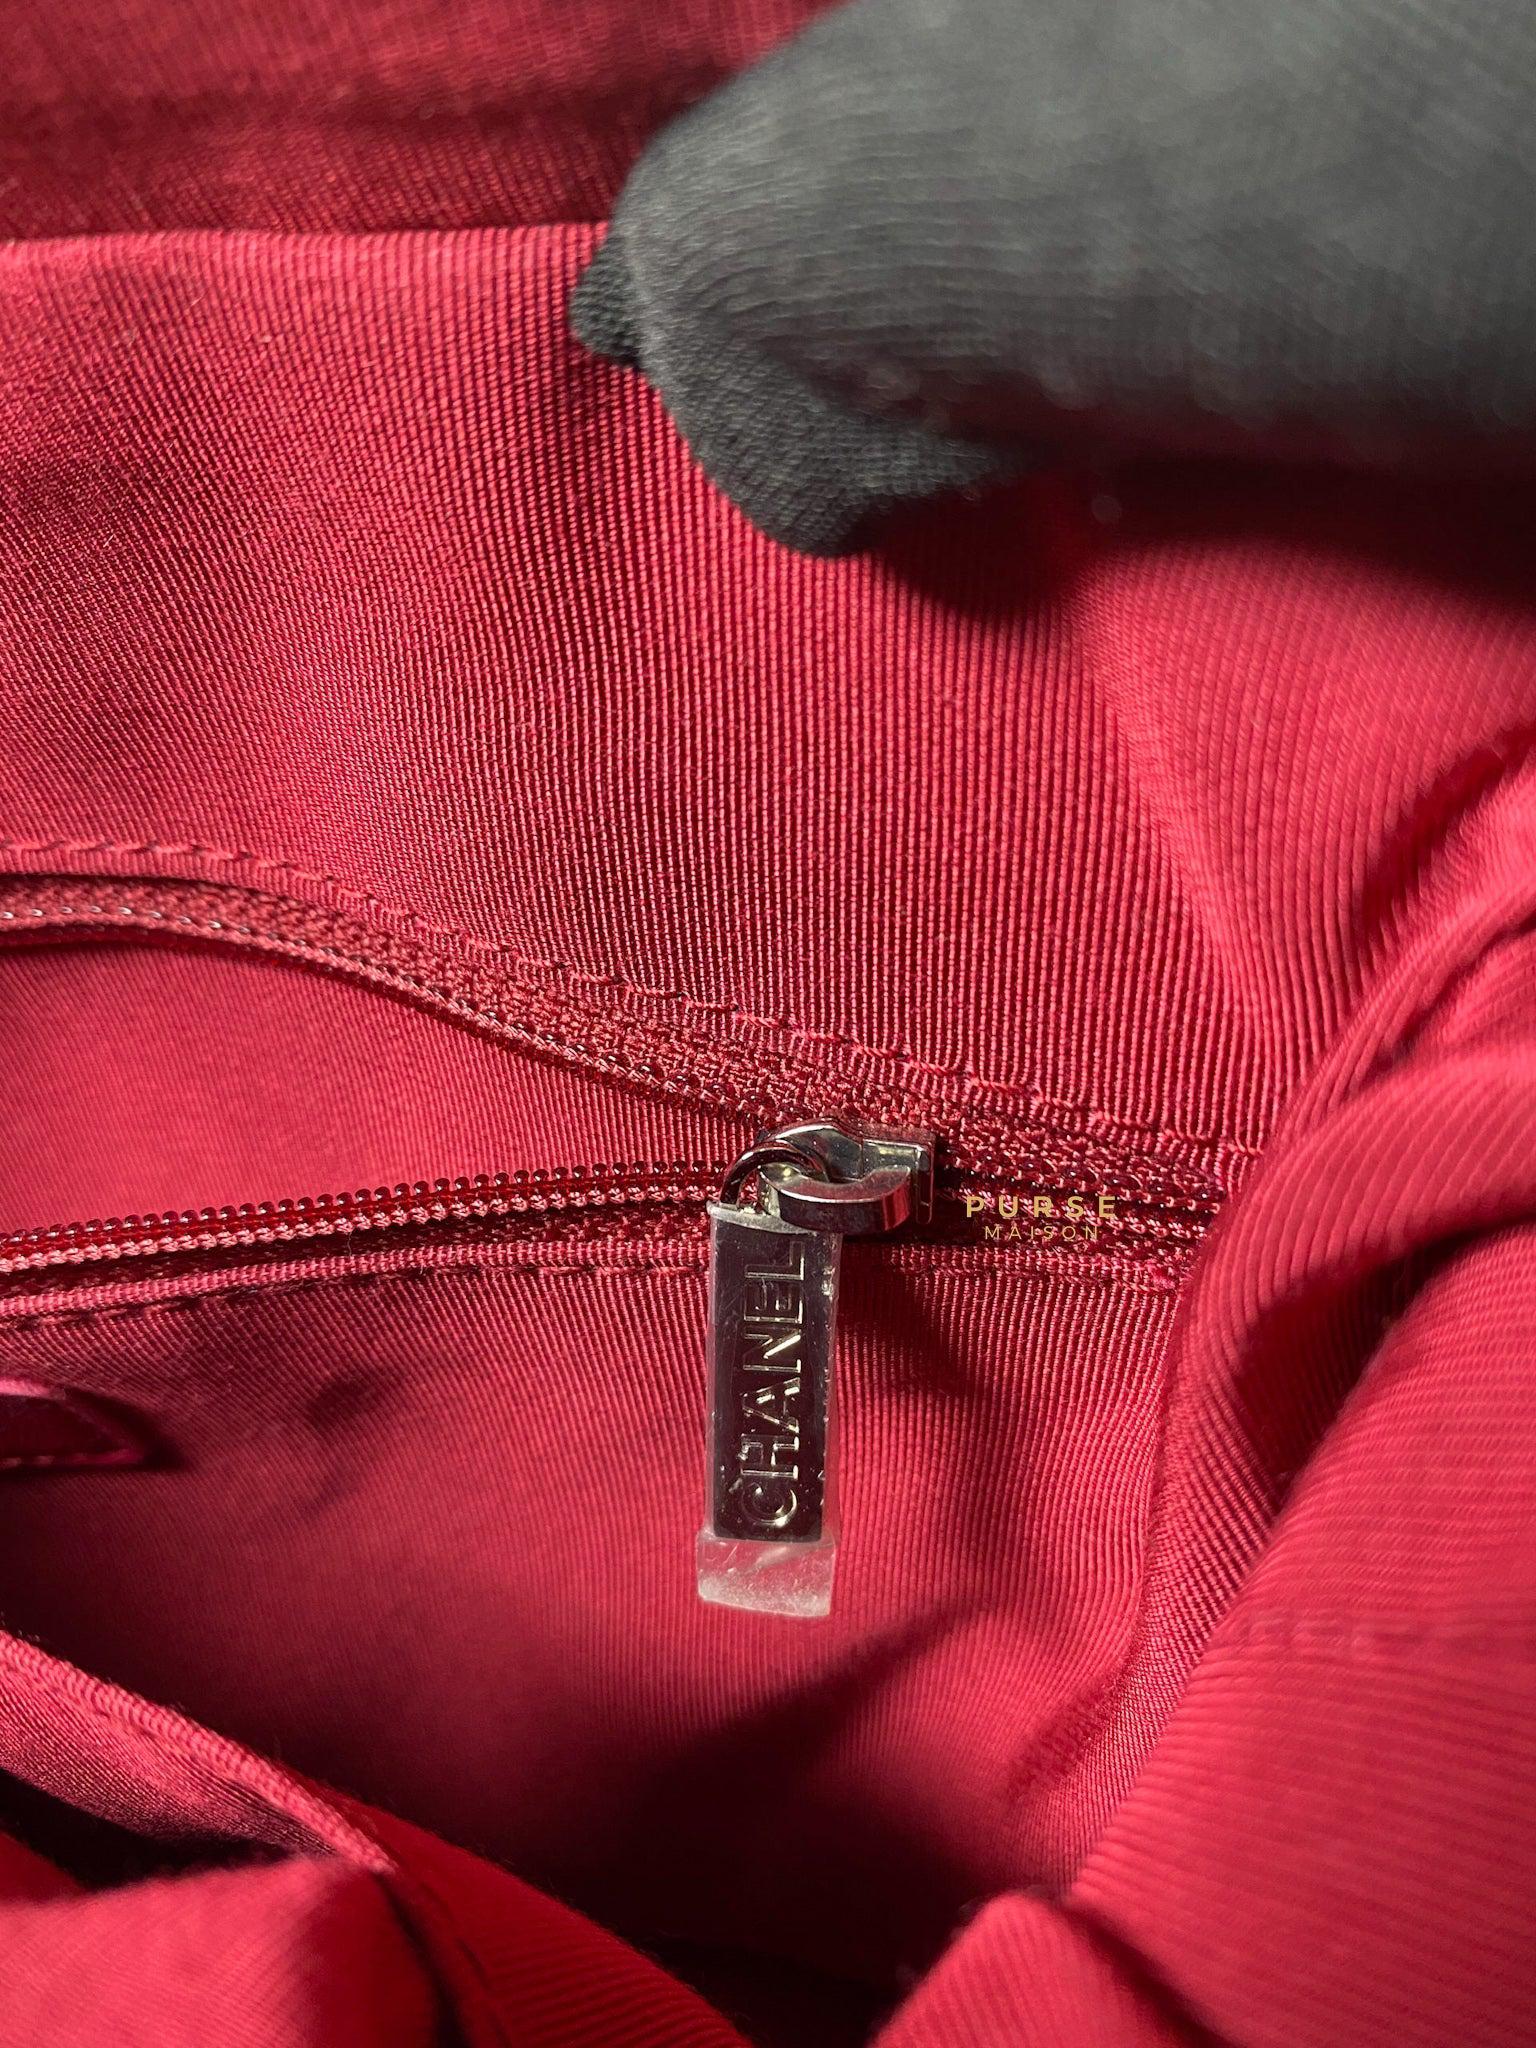 Chanel Gabrielle Hobo Bag Hobo Bag Black in Smooth Calfskin Leather - US